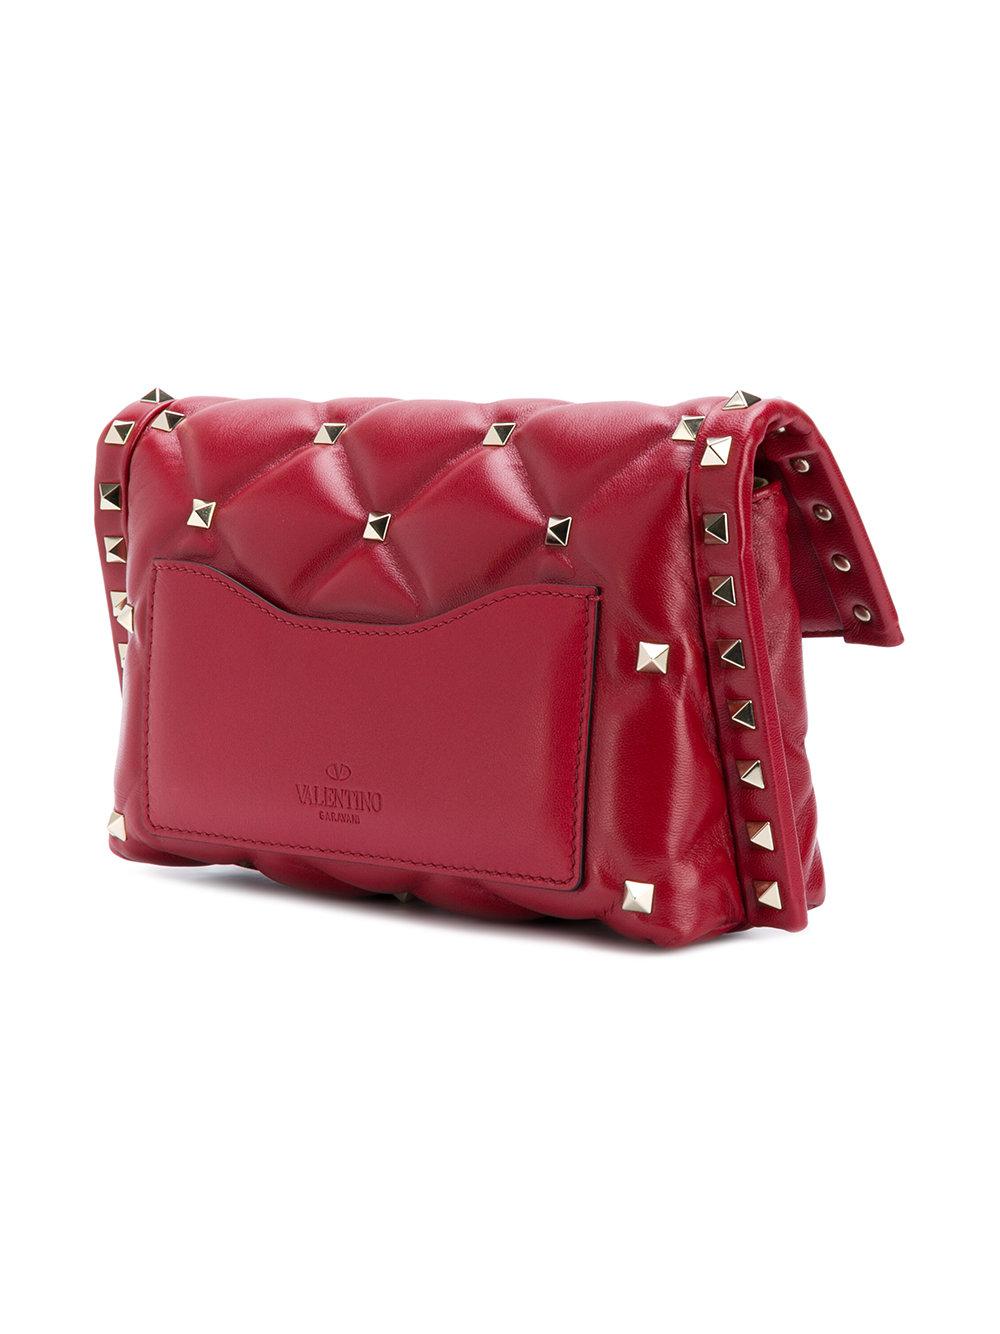 Valentino Leather Valentino Garavani Candystud Clutch in Red | Lyst